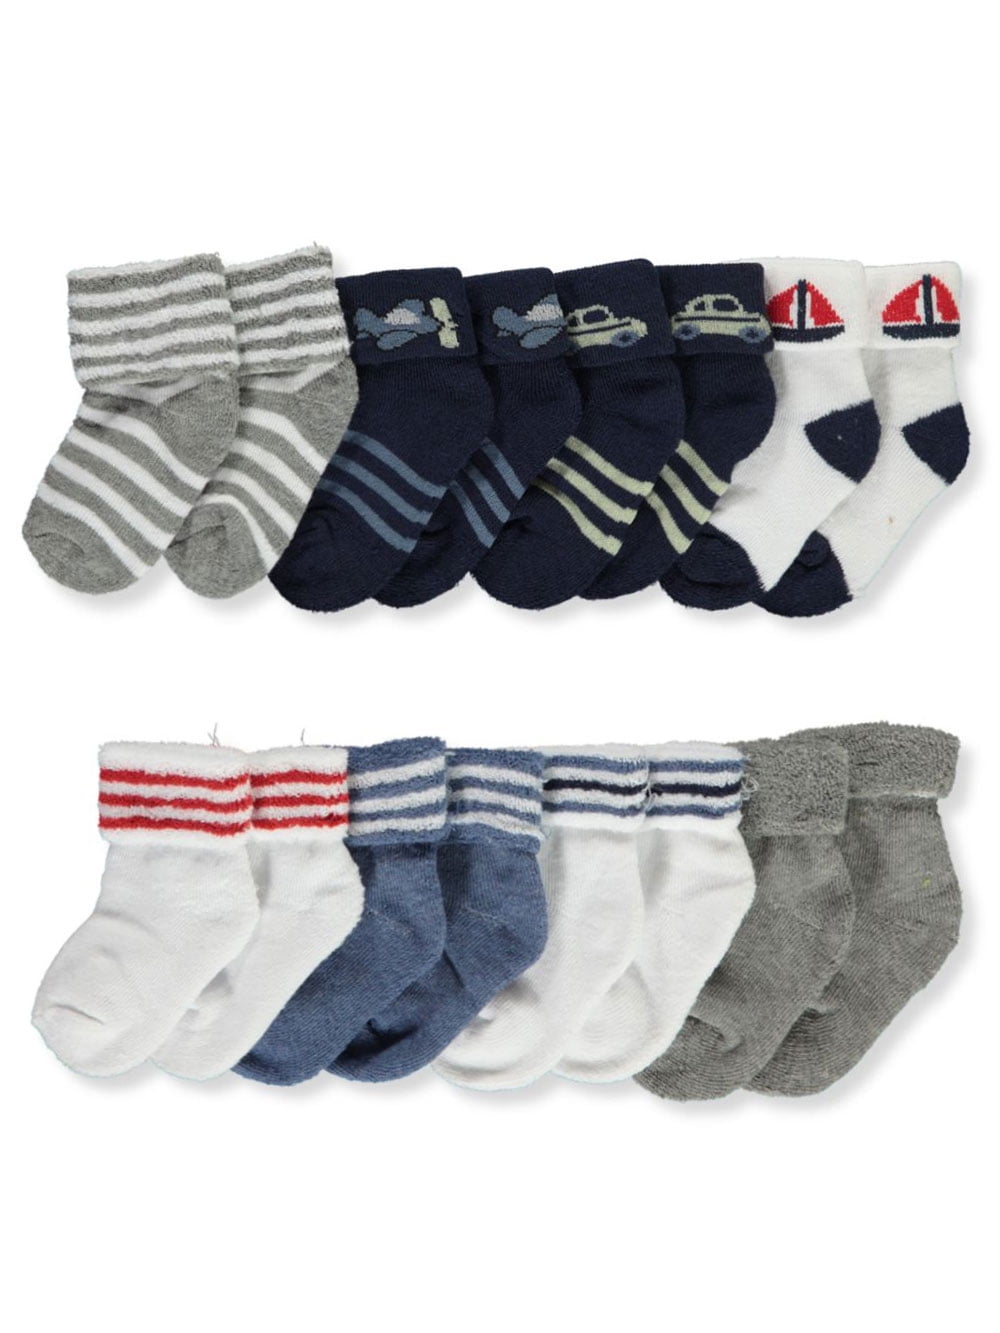 Unisex Newborn Baby Socks Boys Girls 3PK White Brown Grey Socks NB-3m 3-6m 6-12m 